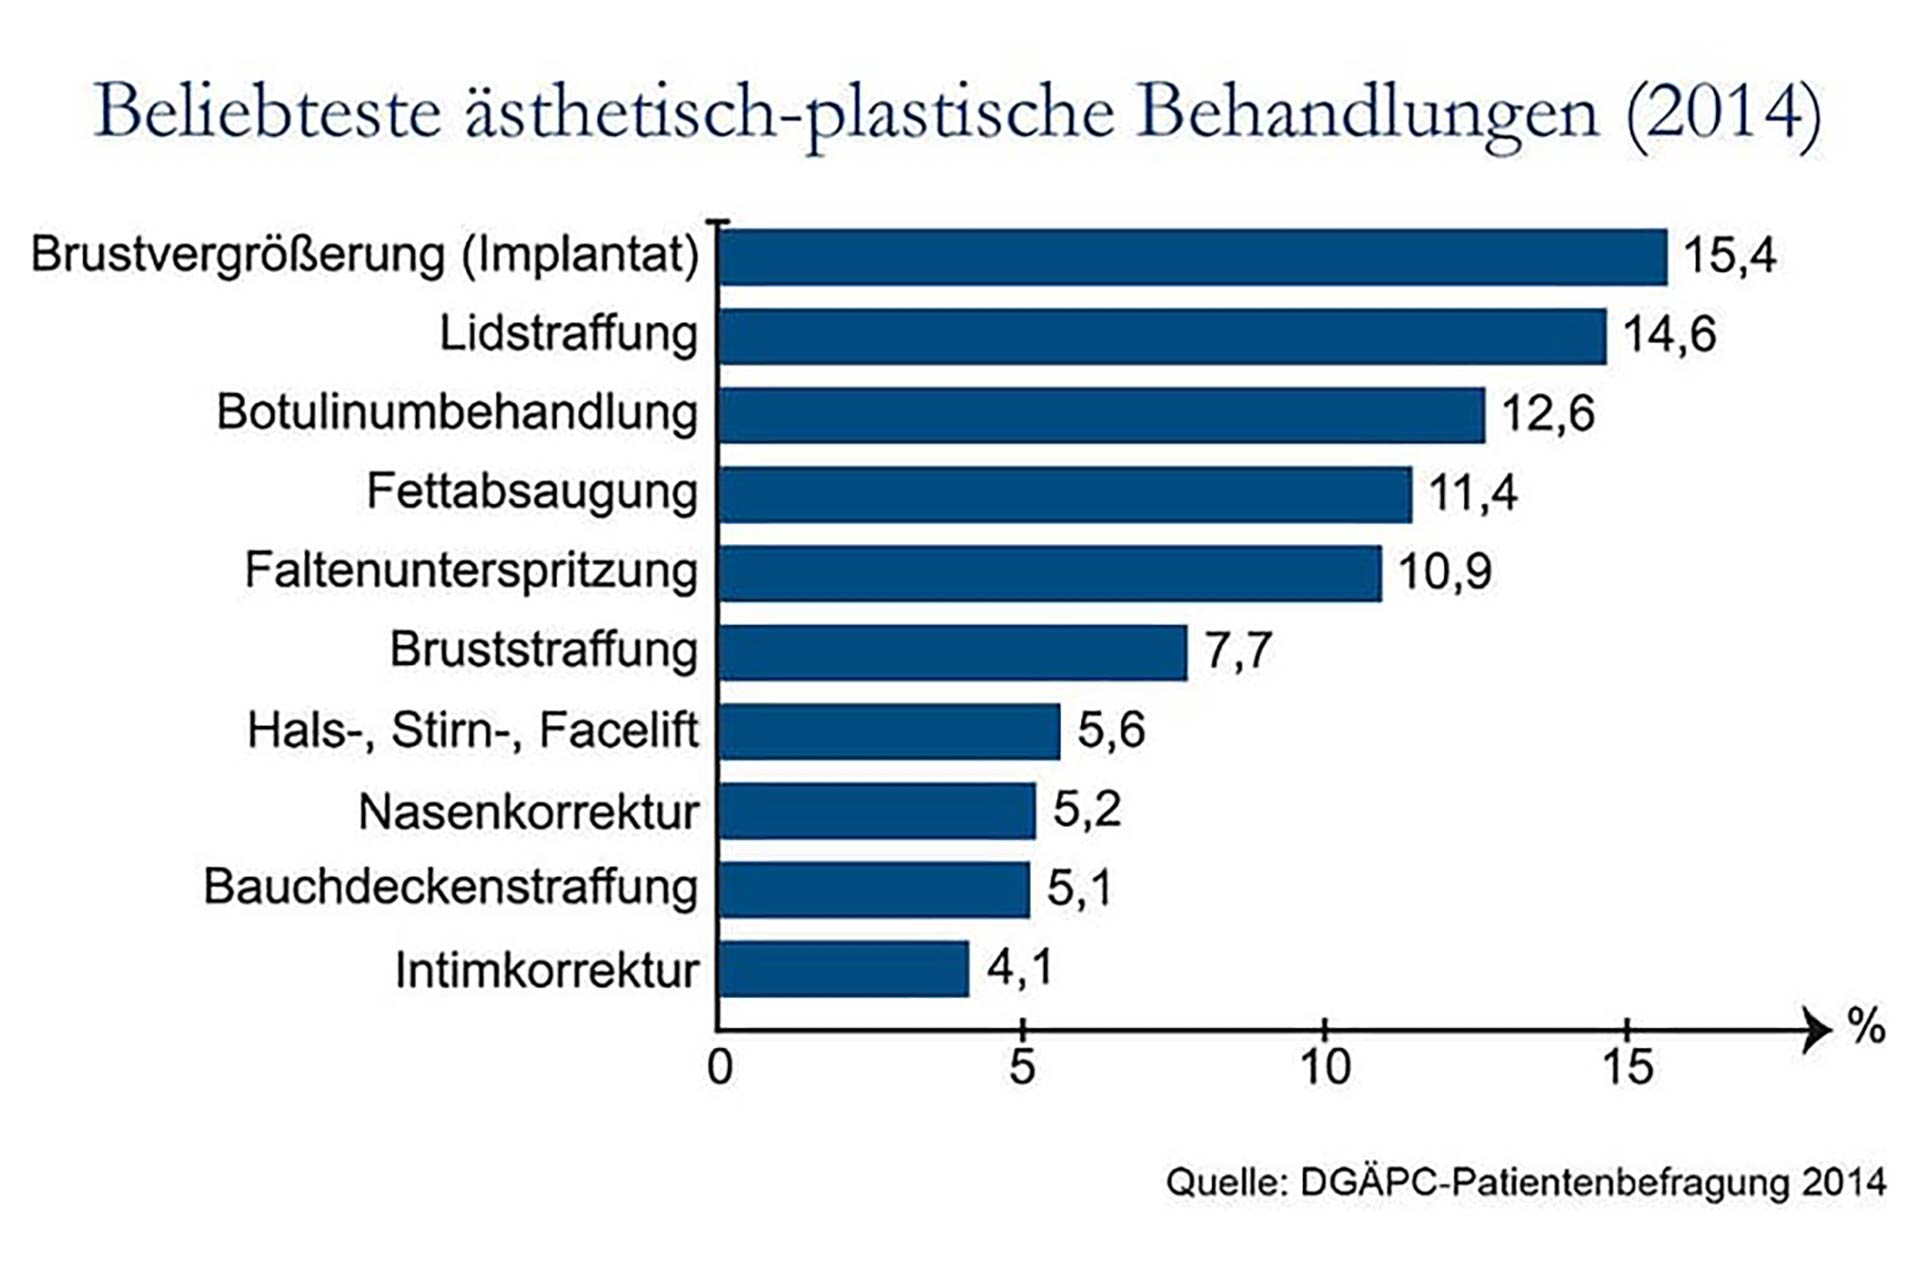 Umfrage beliebteste ästhetisch-plastische Behandlungen